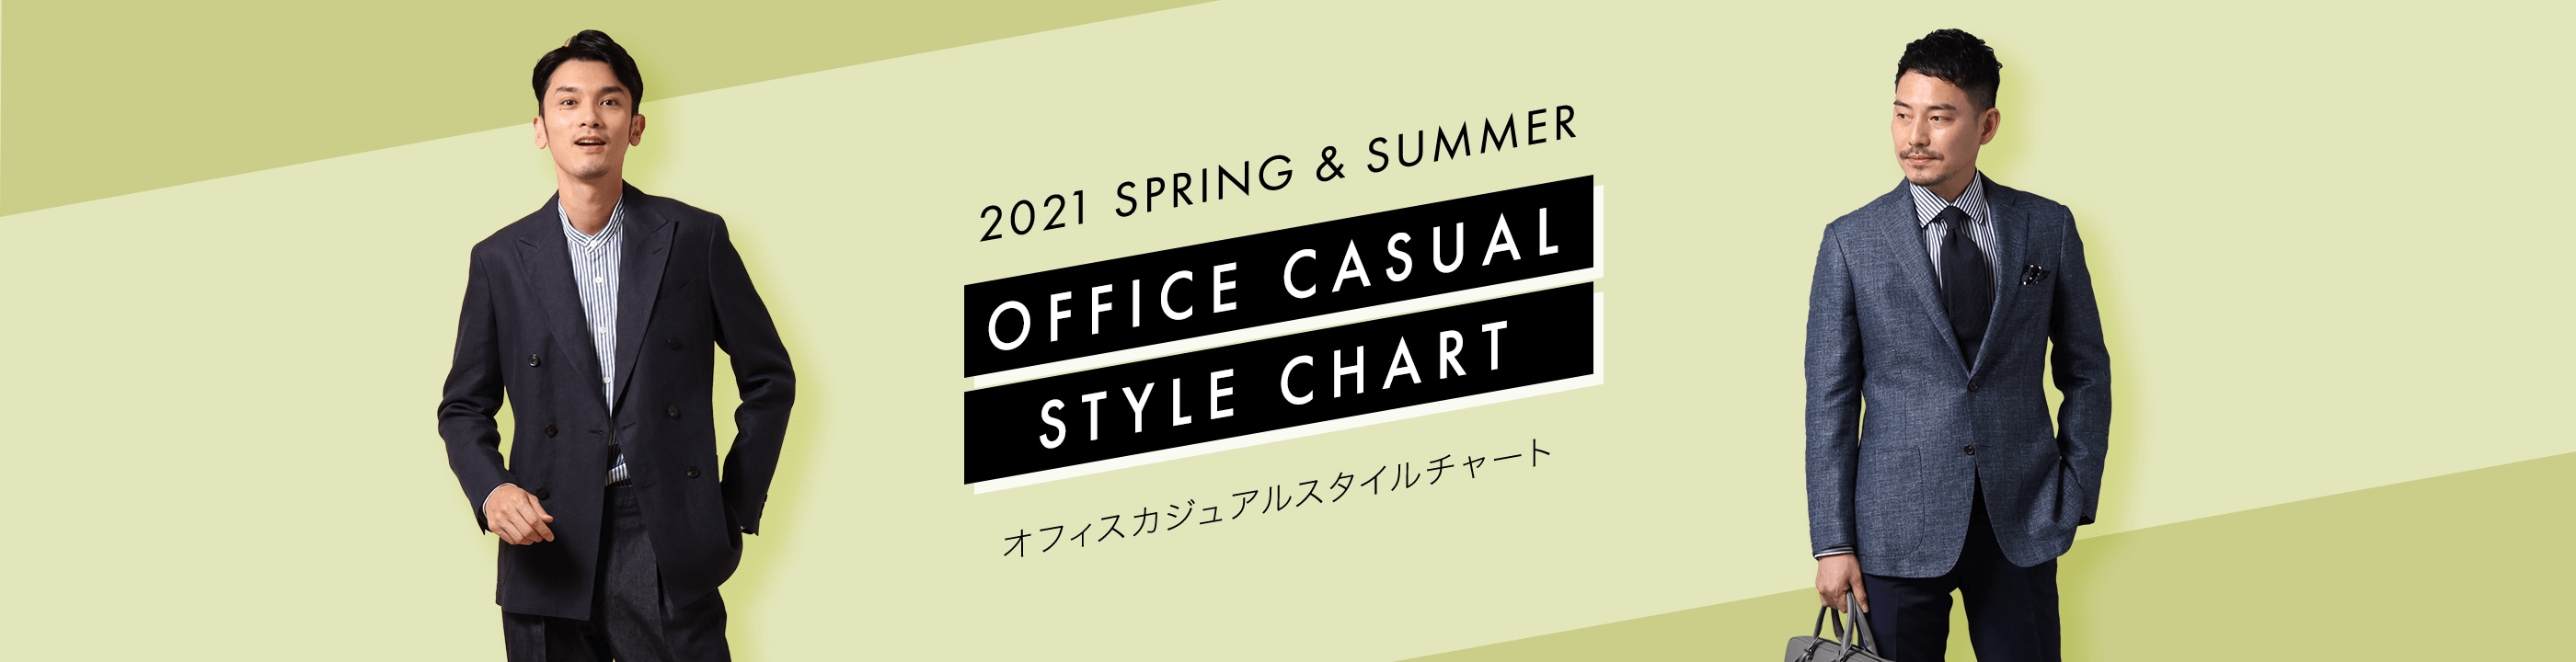 2021 SPRING & SUMMER OFFICE CASUAL STYLE CHART オフィスカジュアルスタイルチャート